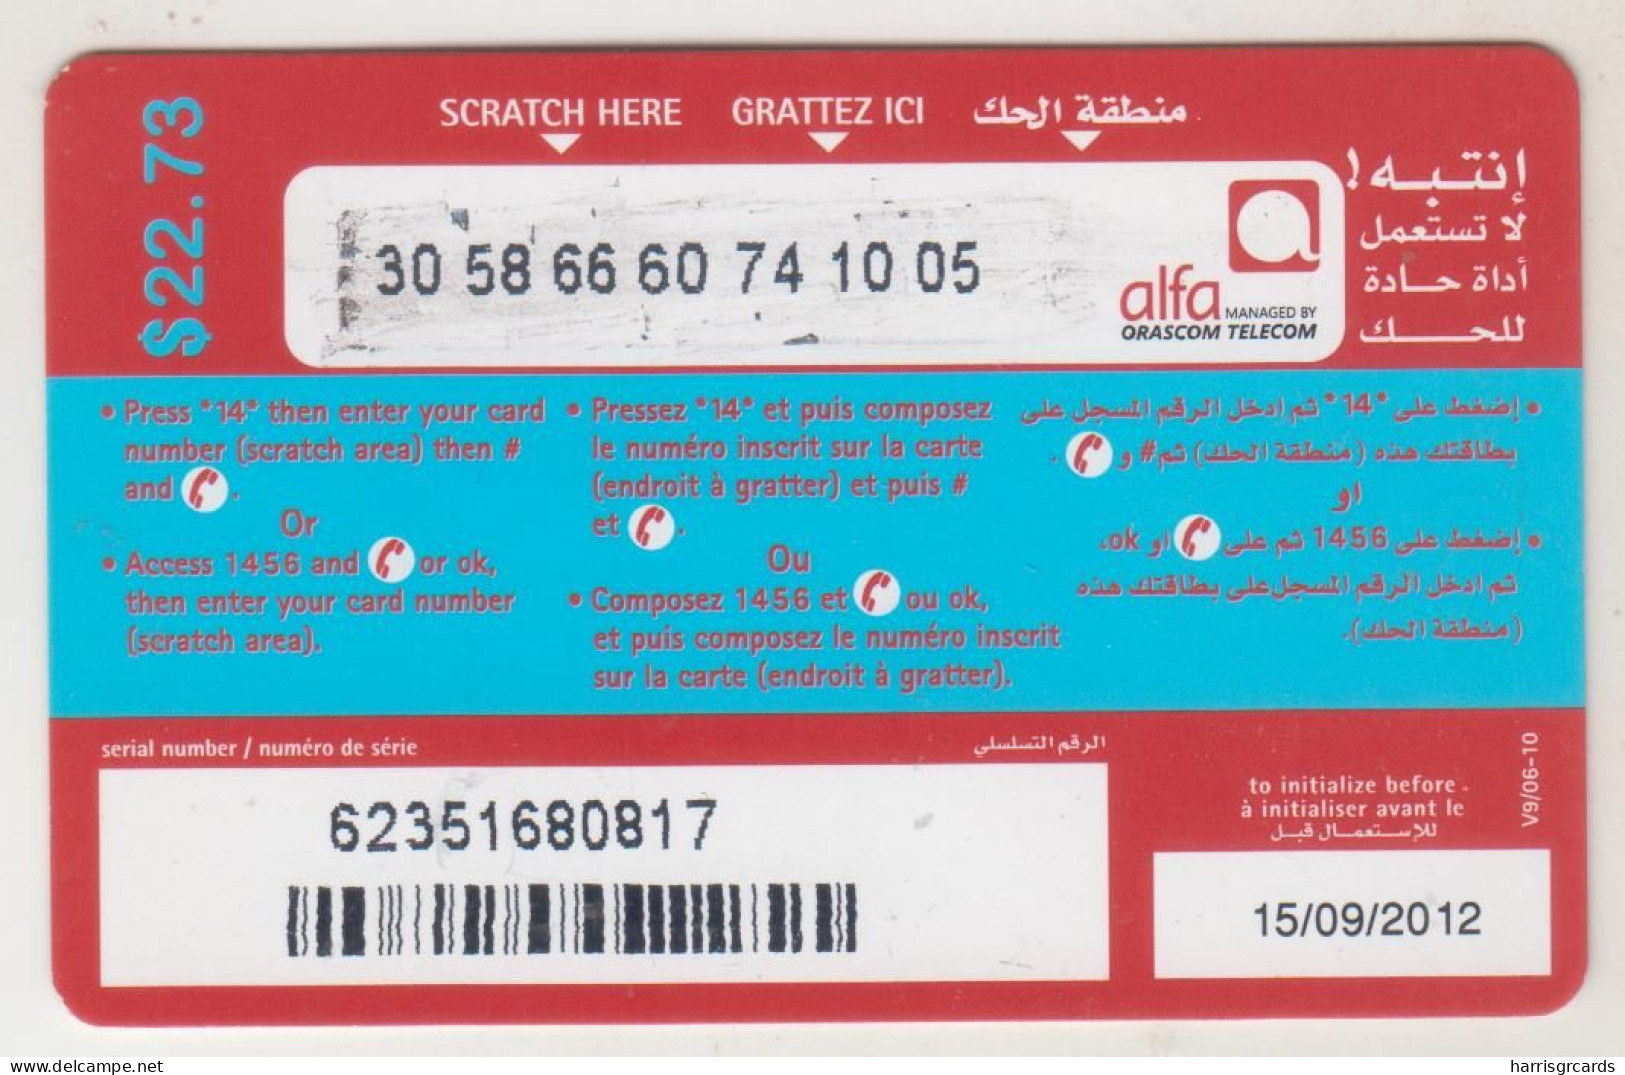 LEBANON - Jbeil Sea View , Alfa Recharge Card 22.73$, Exp.date 15/09/12, Used - Líbano